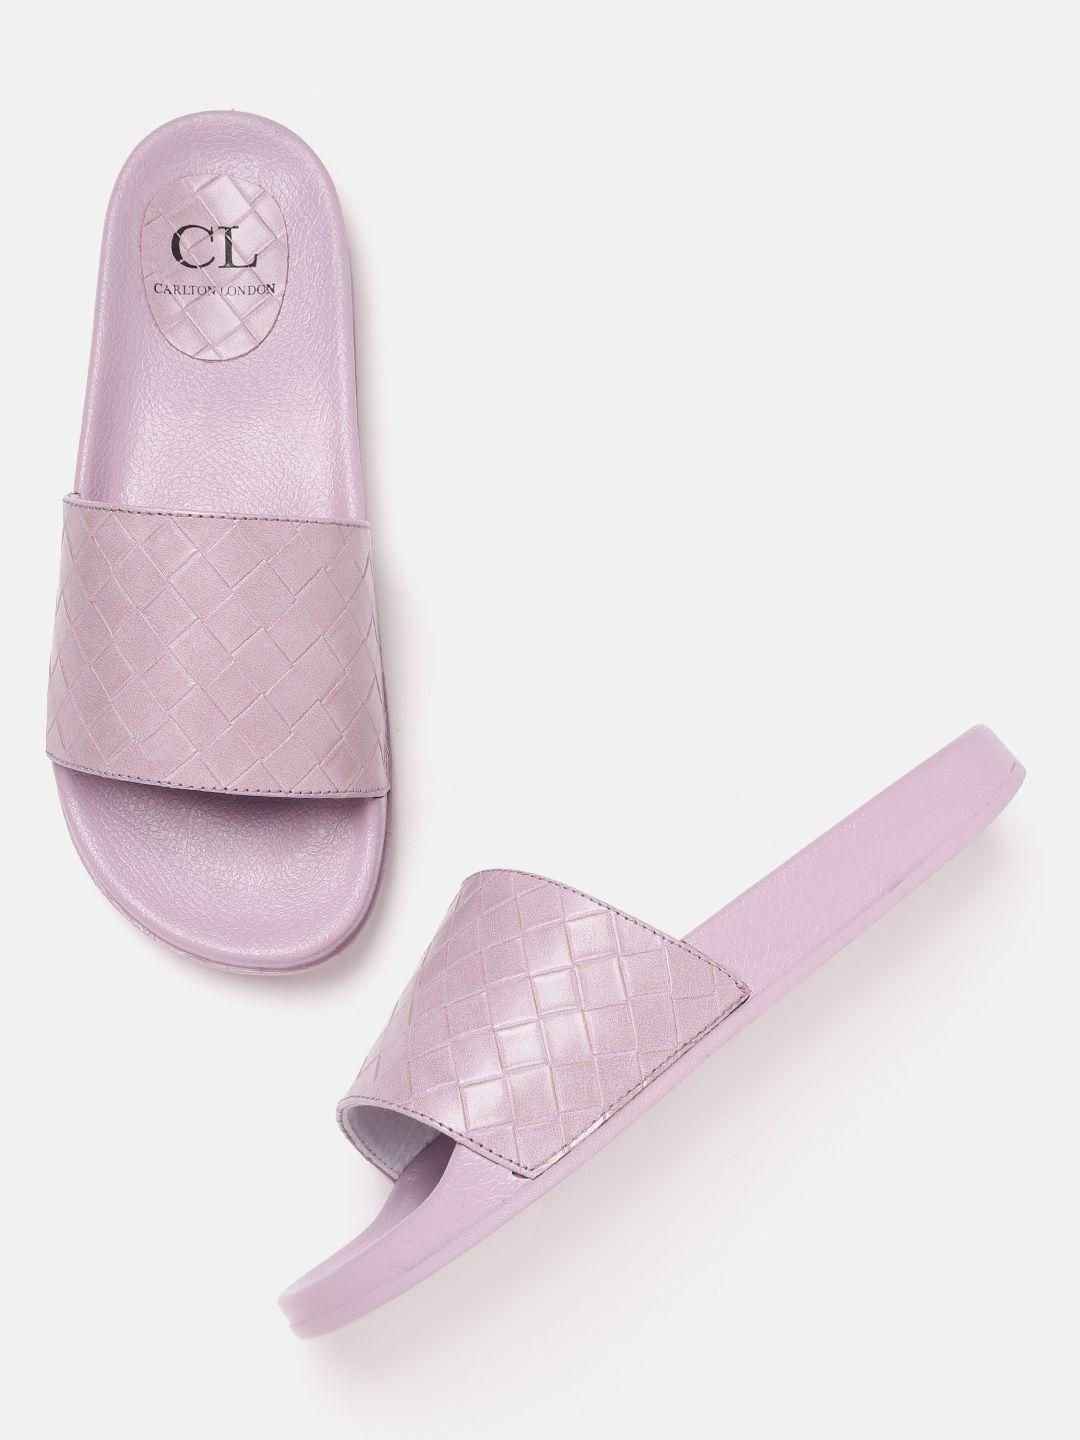 carlton london women lavender basketweave textured open toe flats